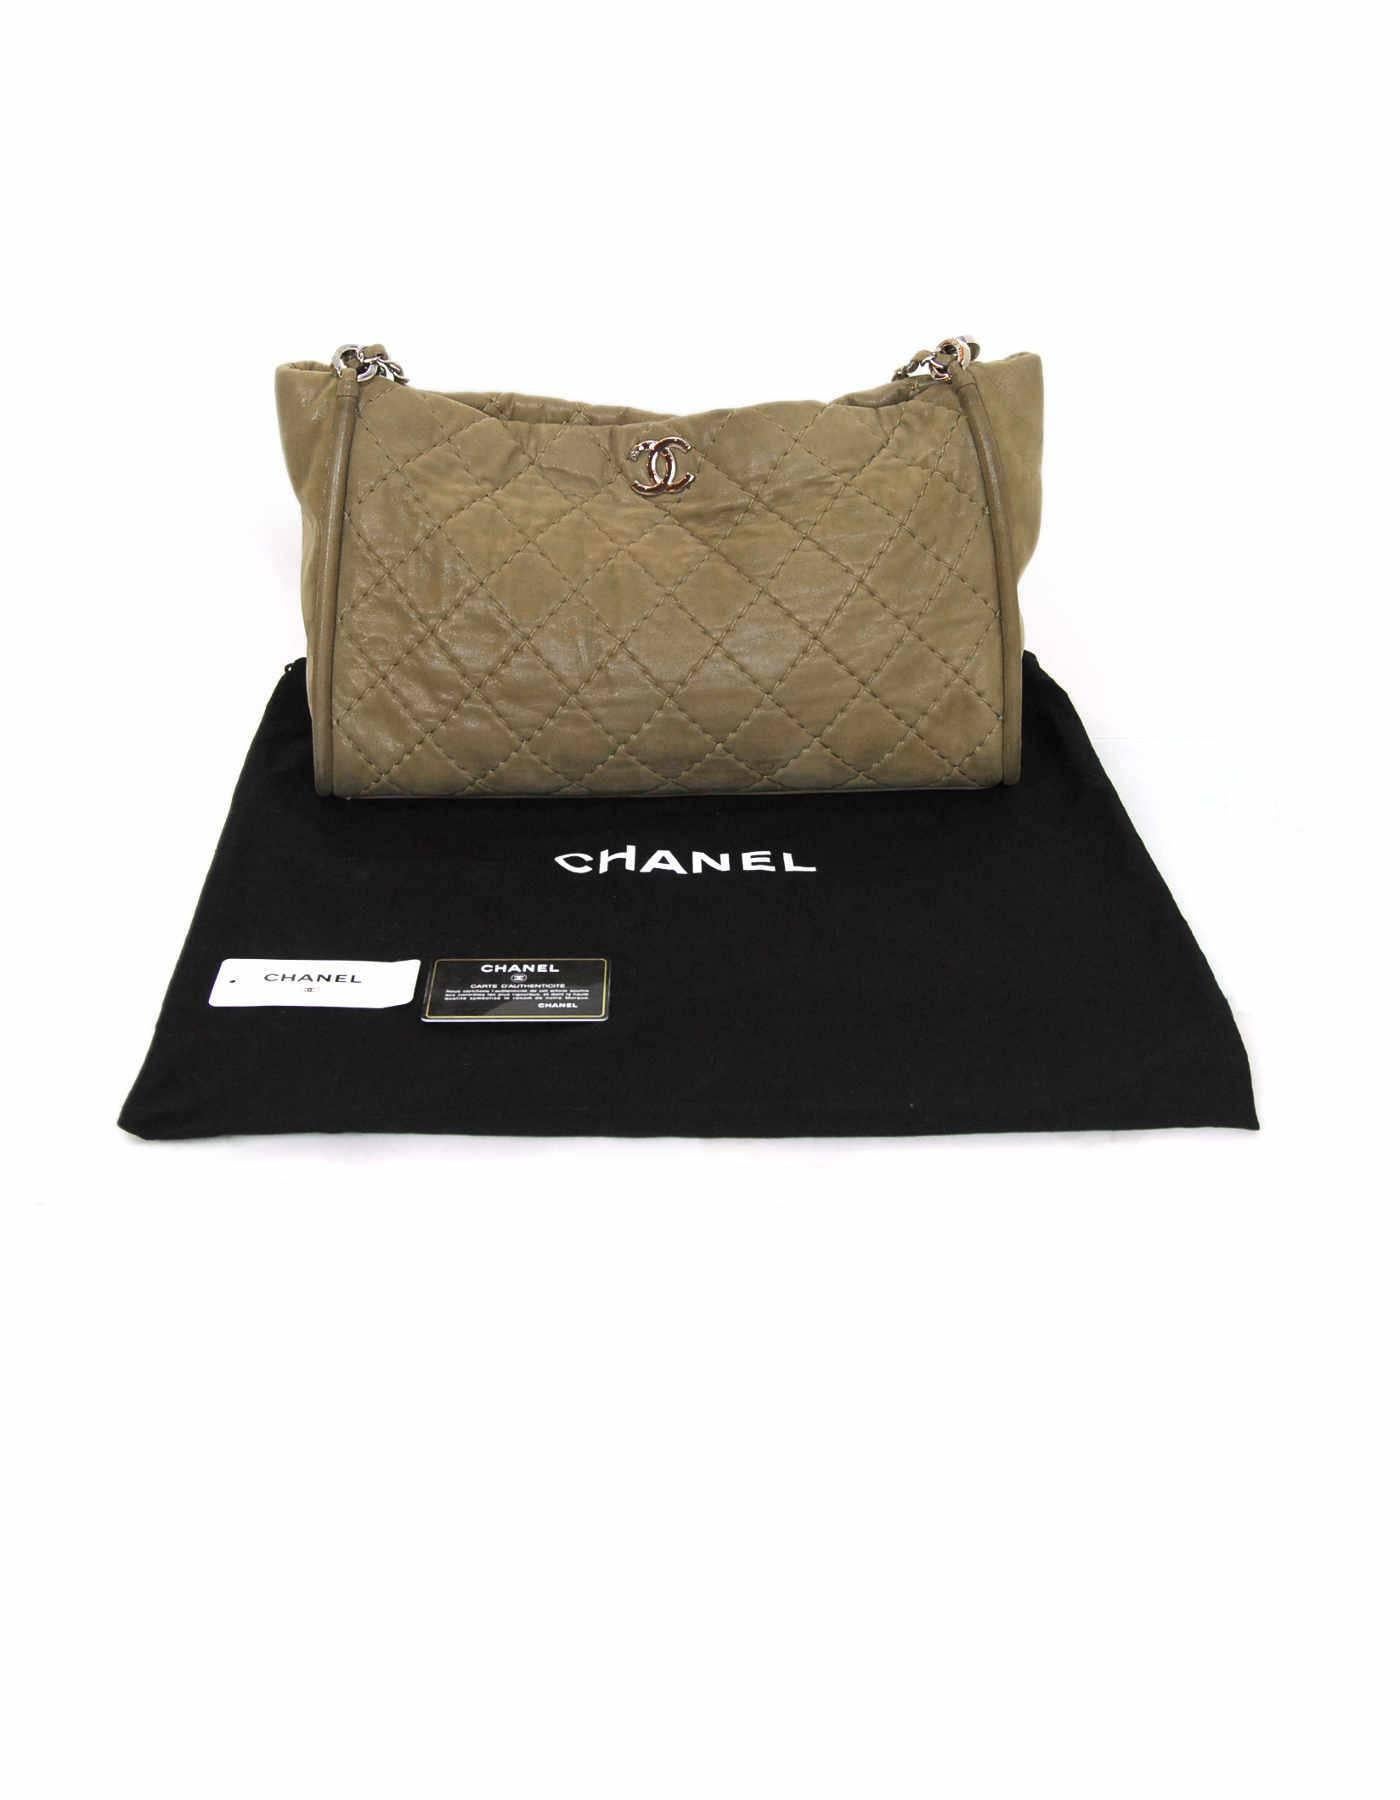 Chanel Tan Iridescent Quilted Calfskin Shoulder Bag 3